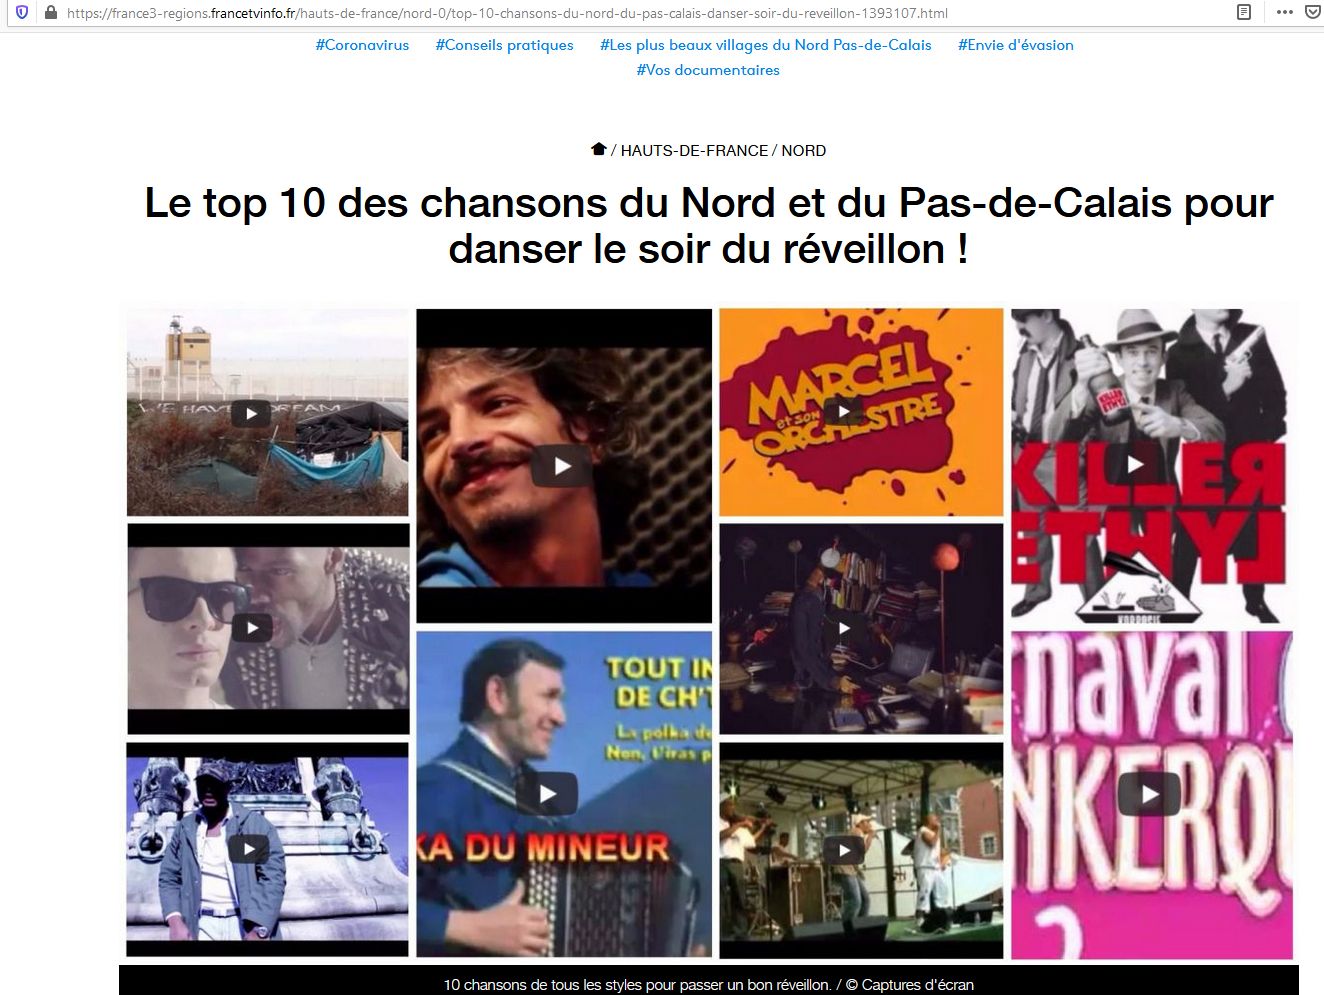 Top-10-chansons-du-nord-du-pas-calais-danser-soir-du-reveillon-1393107.jpg